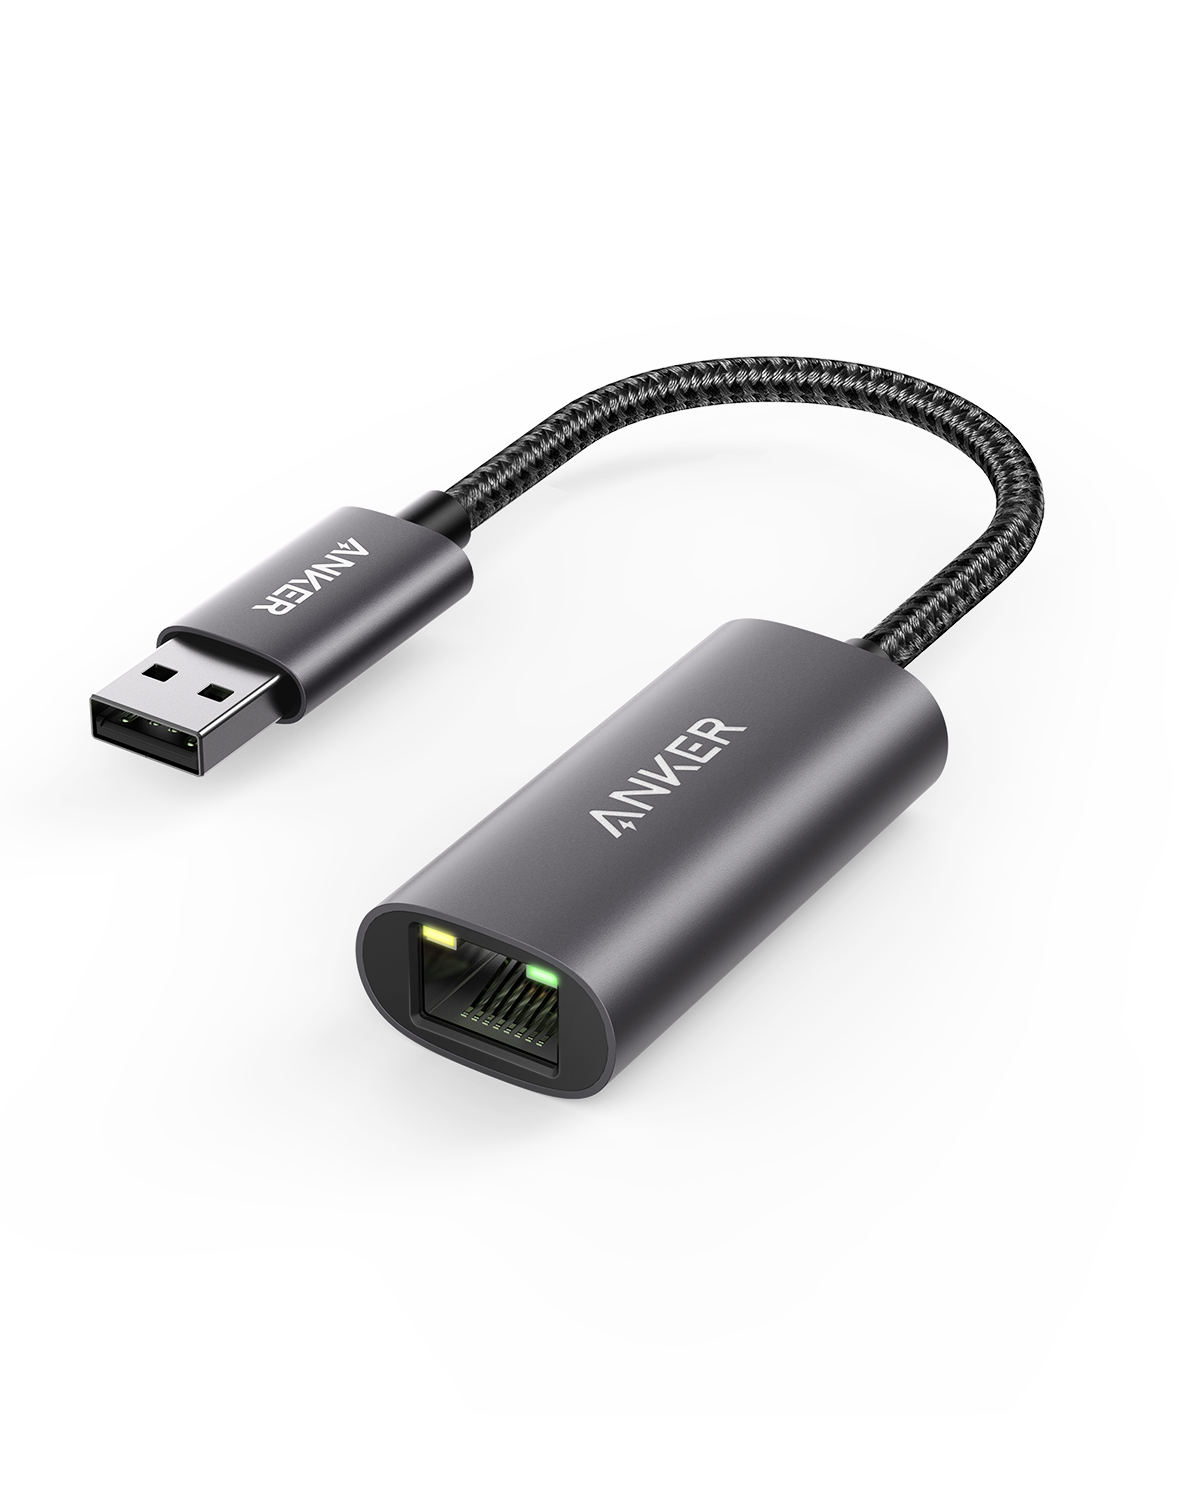 Anker USB C to Ethernet Adapter, Portable 1-Gigabit Network Hub